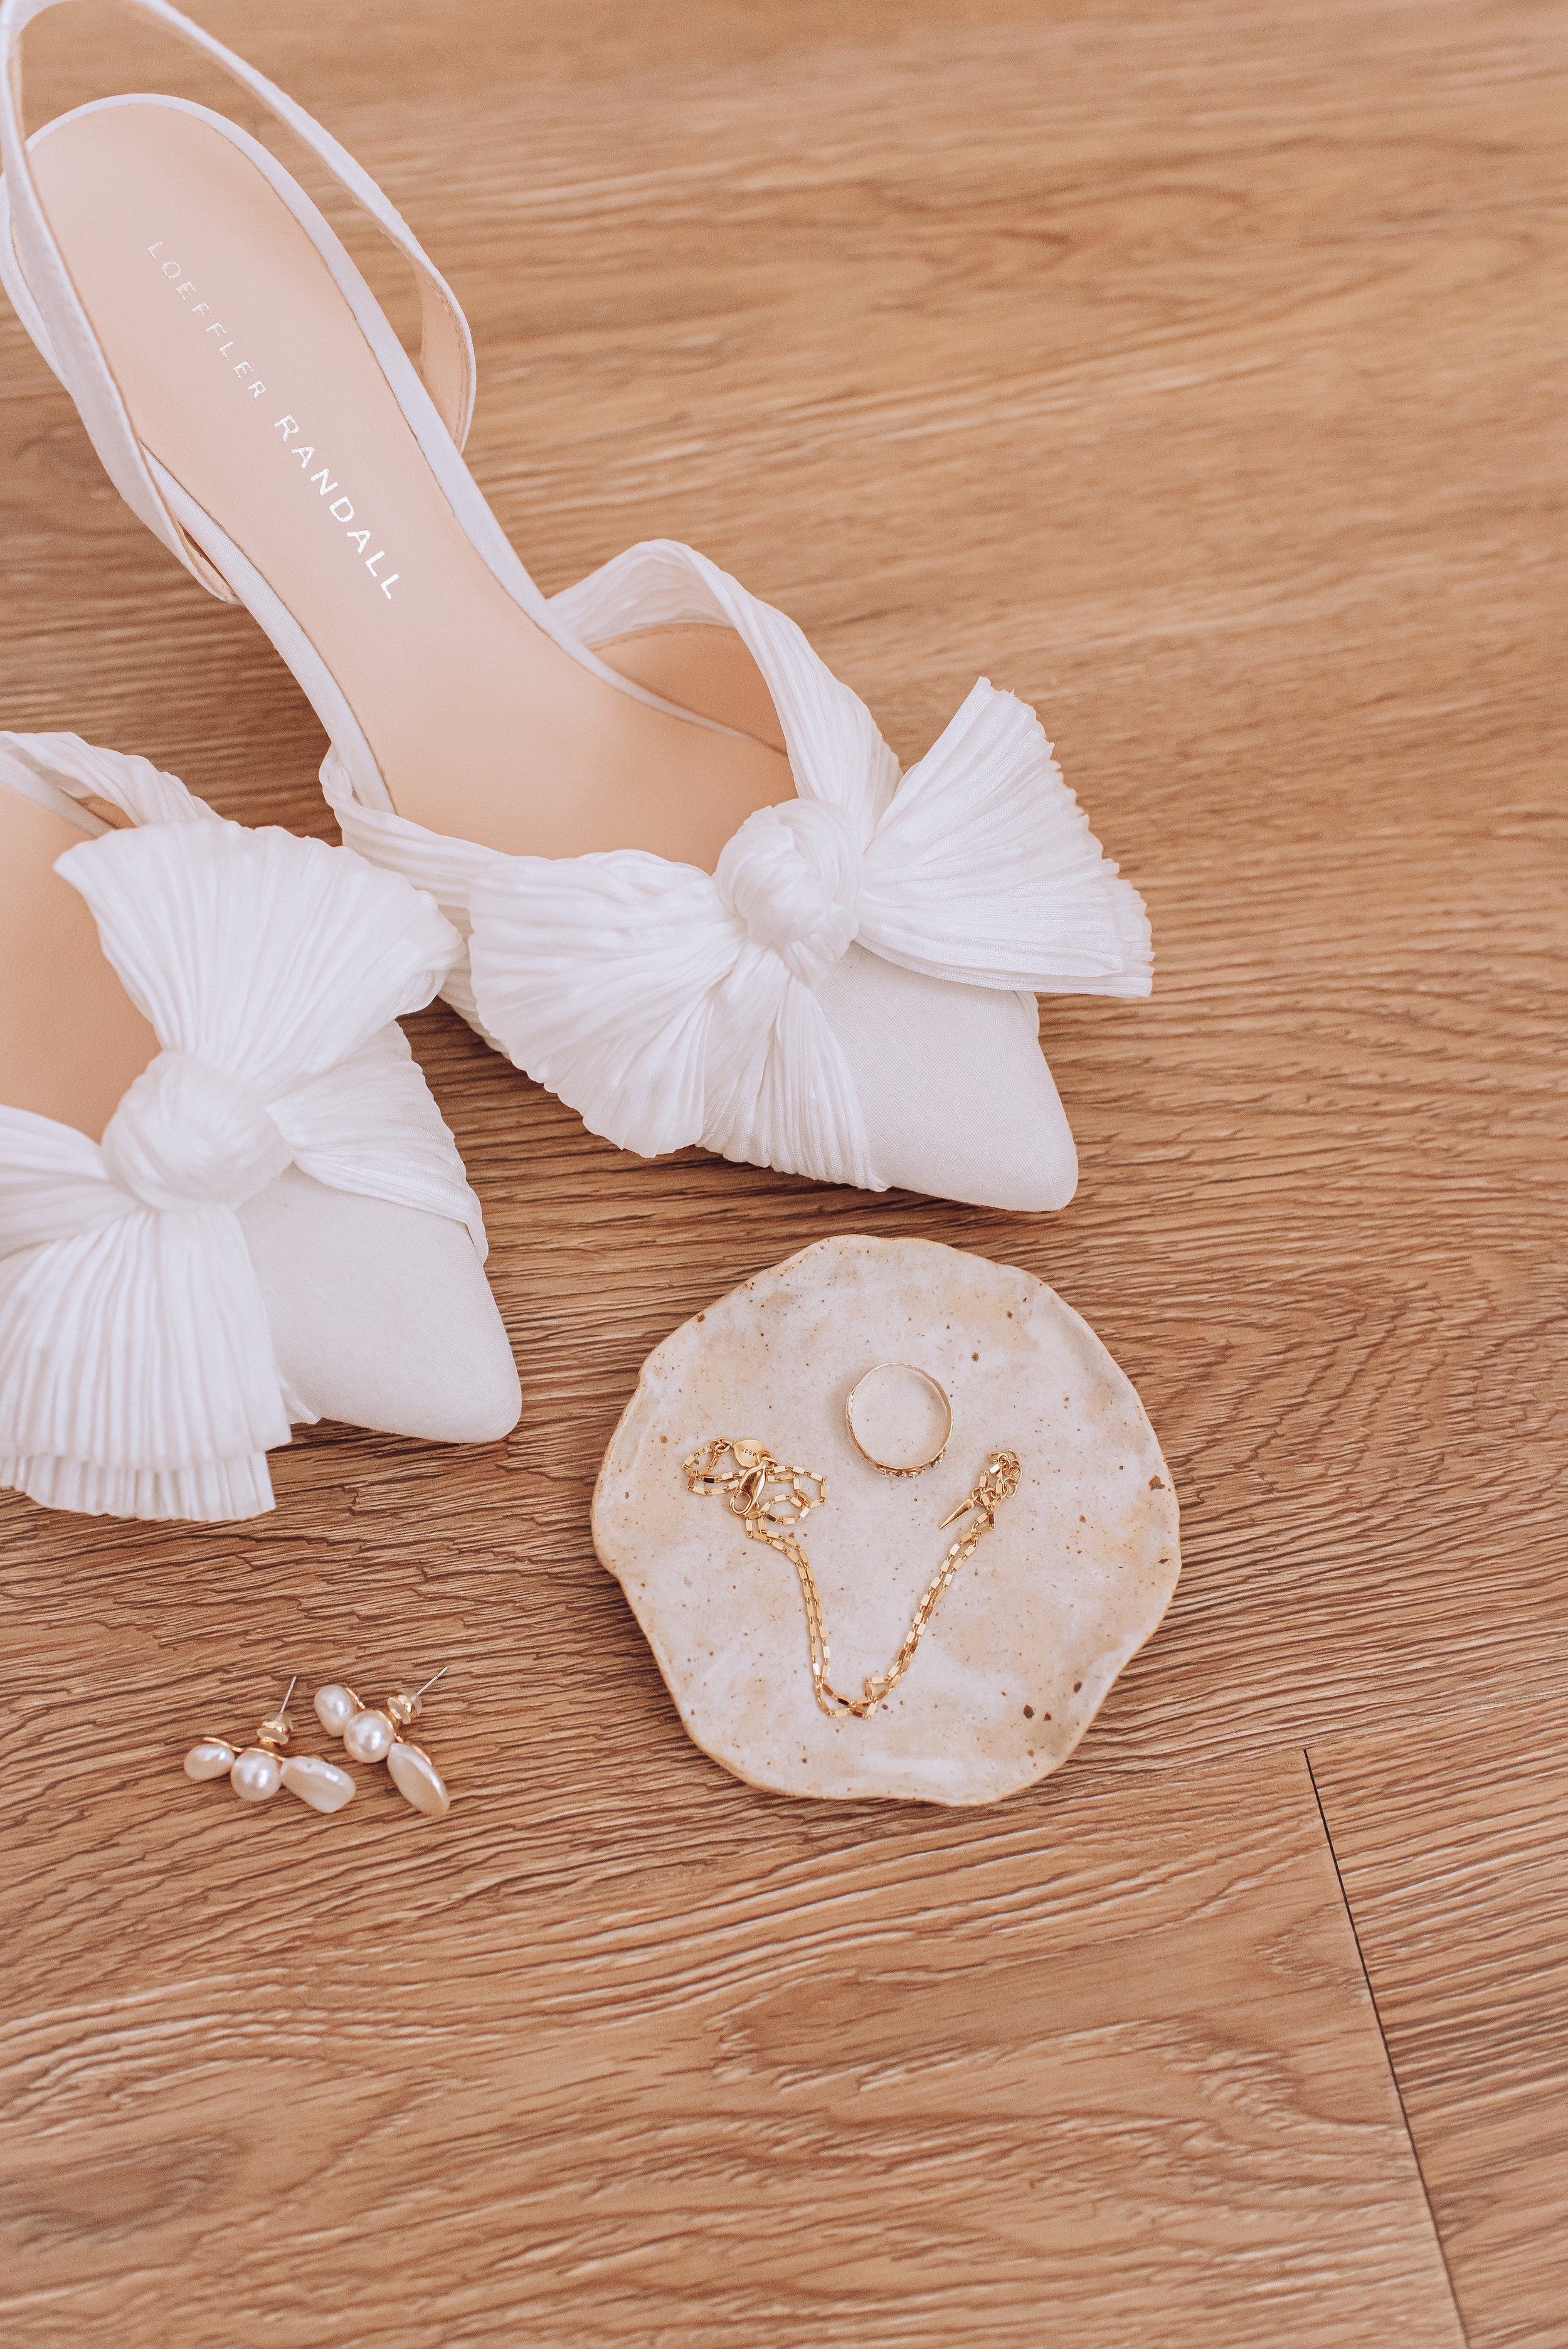 Wedding shoes | Details